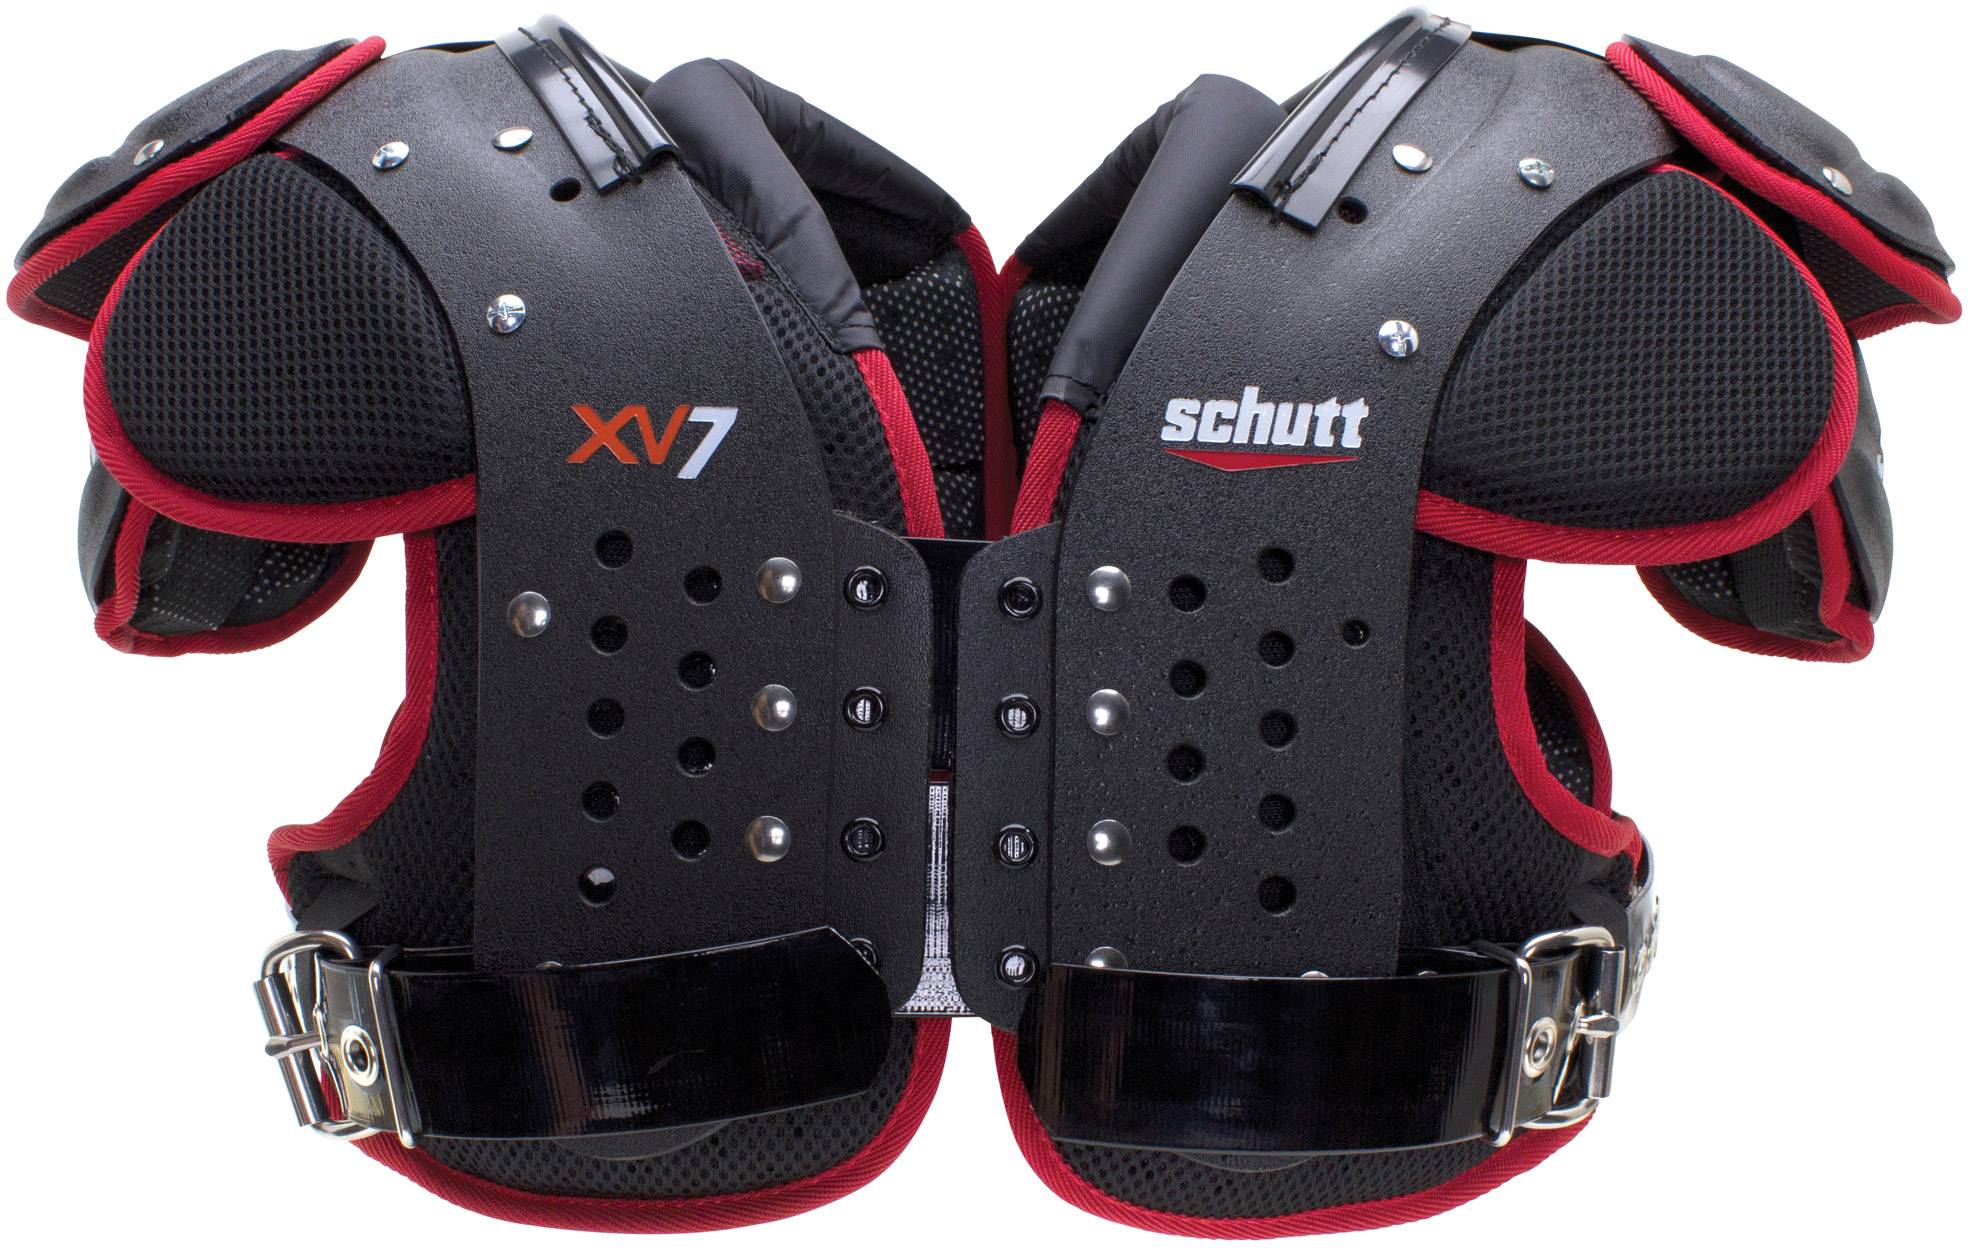 Schutt XV7 Adult Football Shoulder Pads - All Purpose